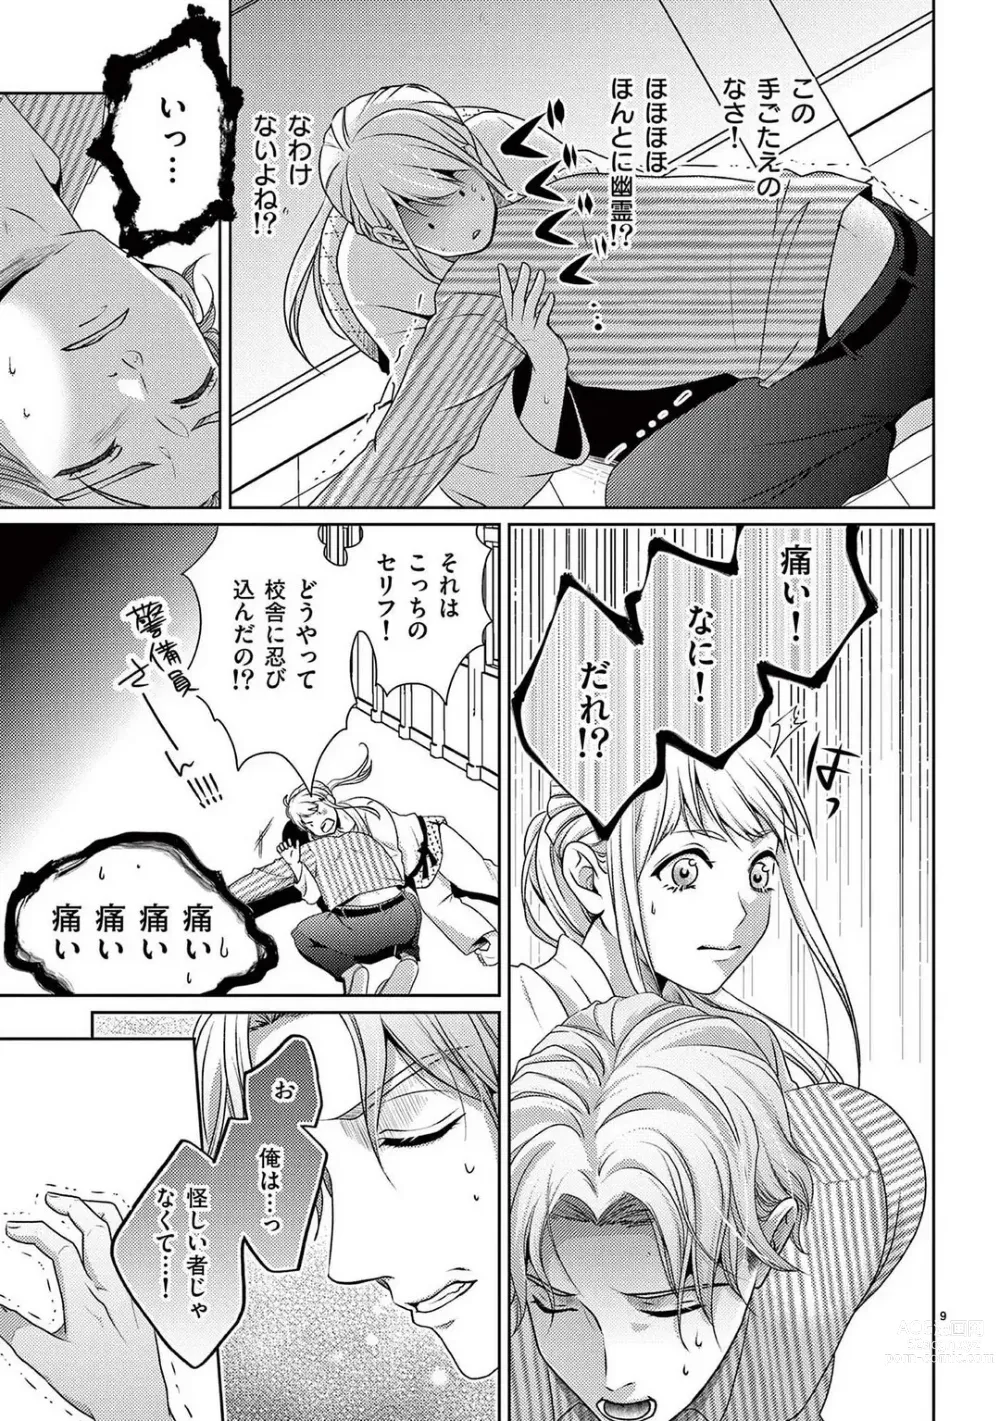 Page 10 of manga Sono Ase, Sekkusu Pafuyūmu. 〜 Sutte, Kisushite, Musabotte~Chp.1-7